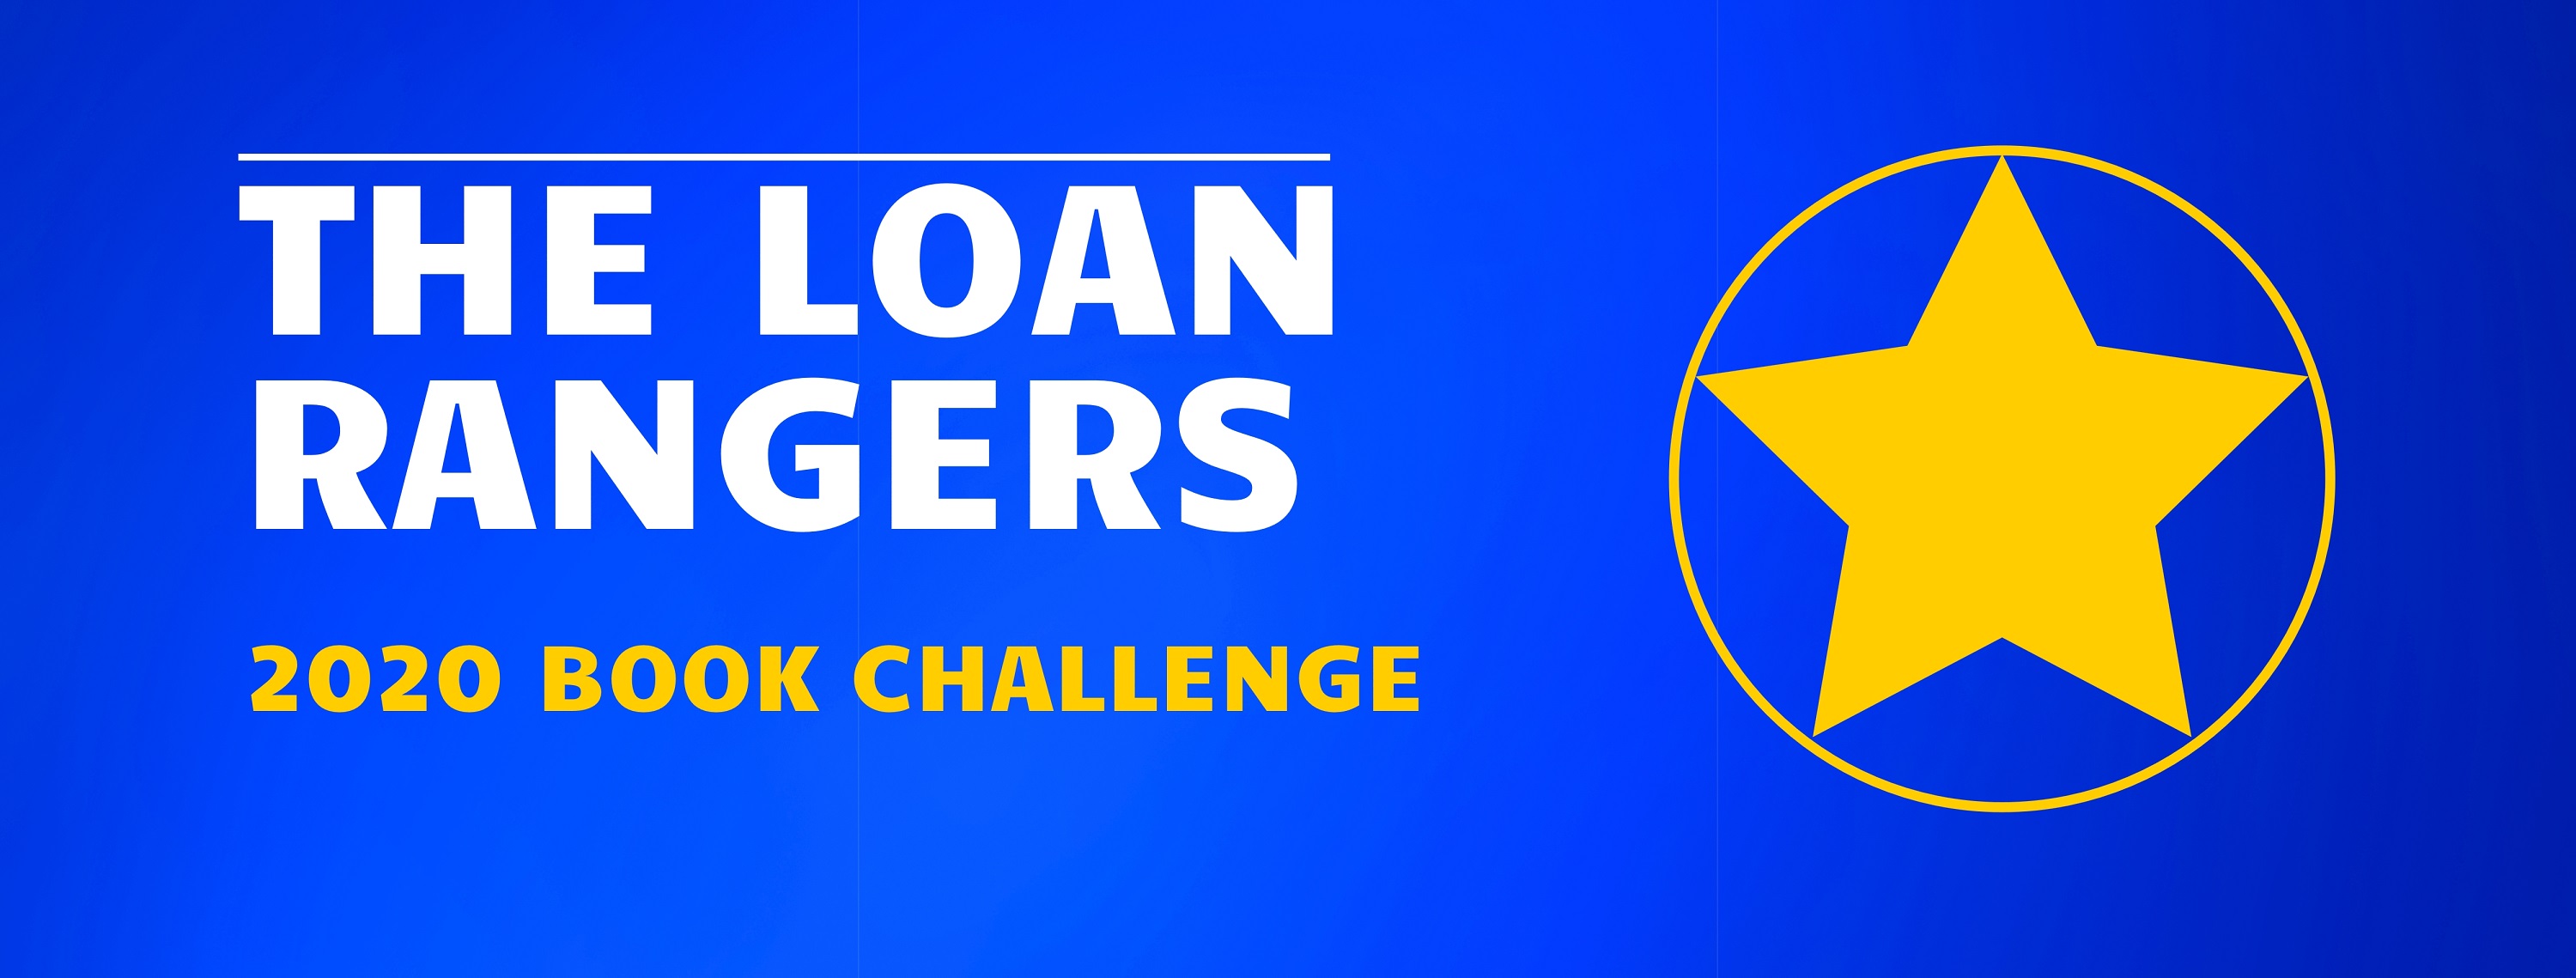 Loan Rangers book challenge2